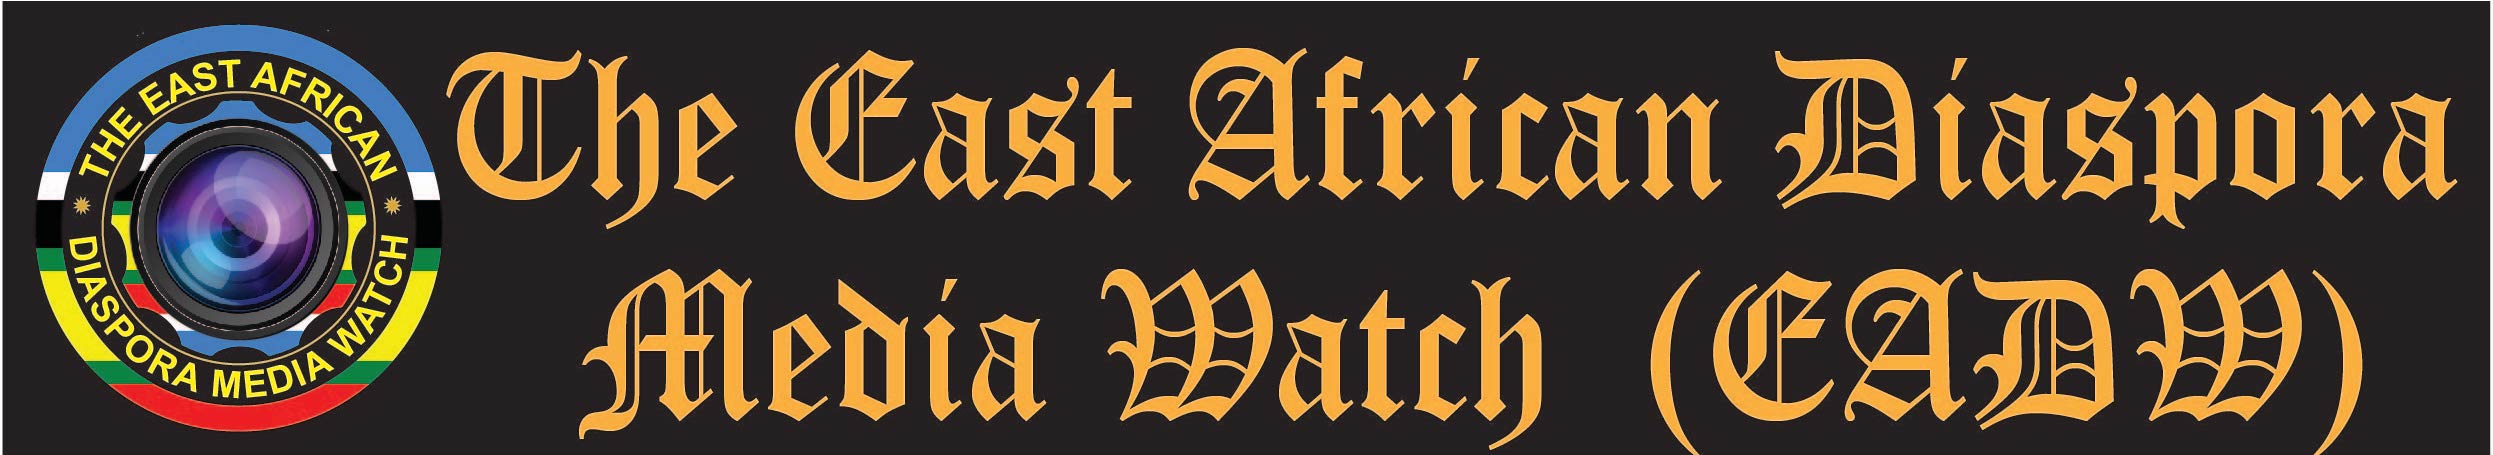 The East African Diaspora Media Watch (EADM) 